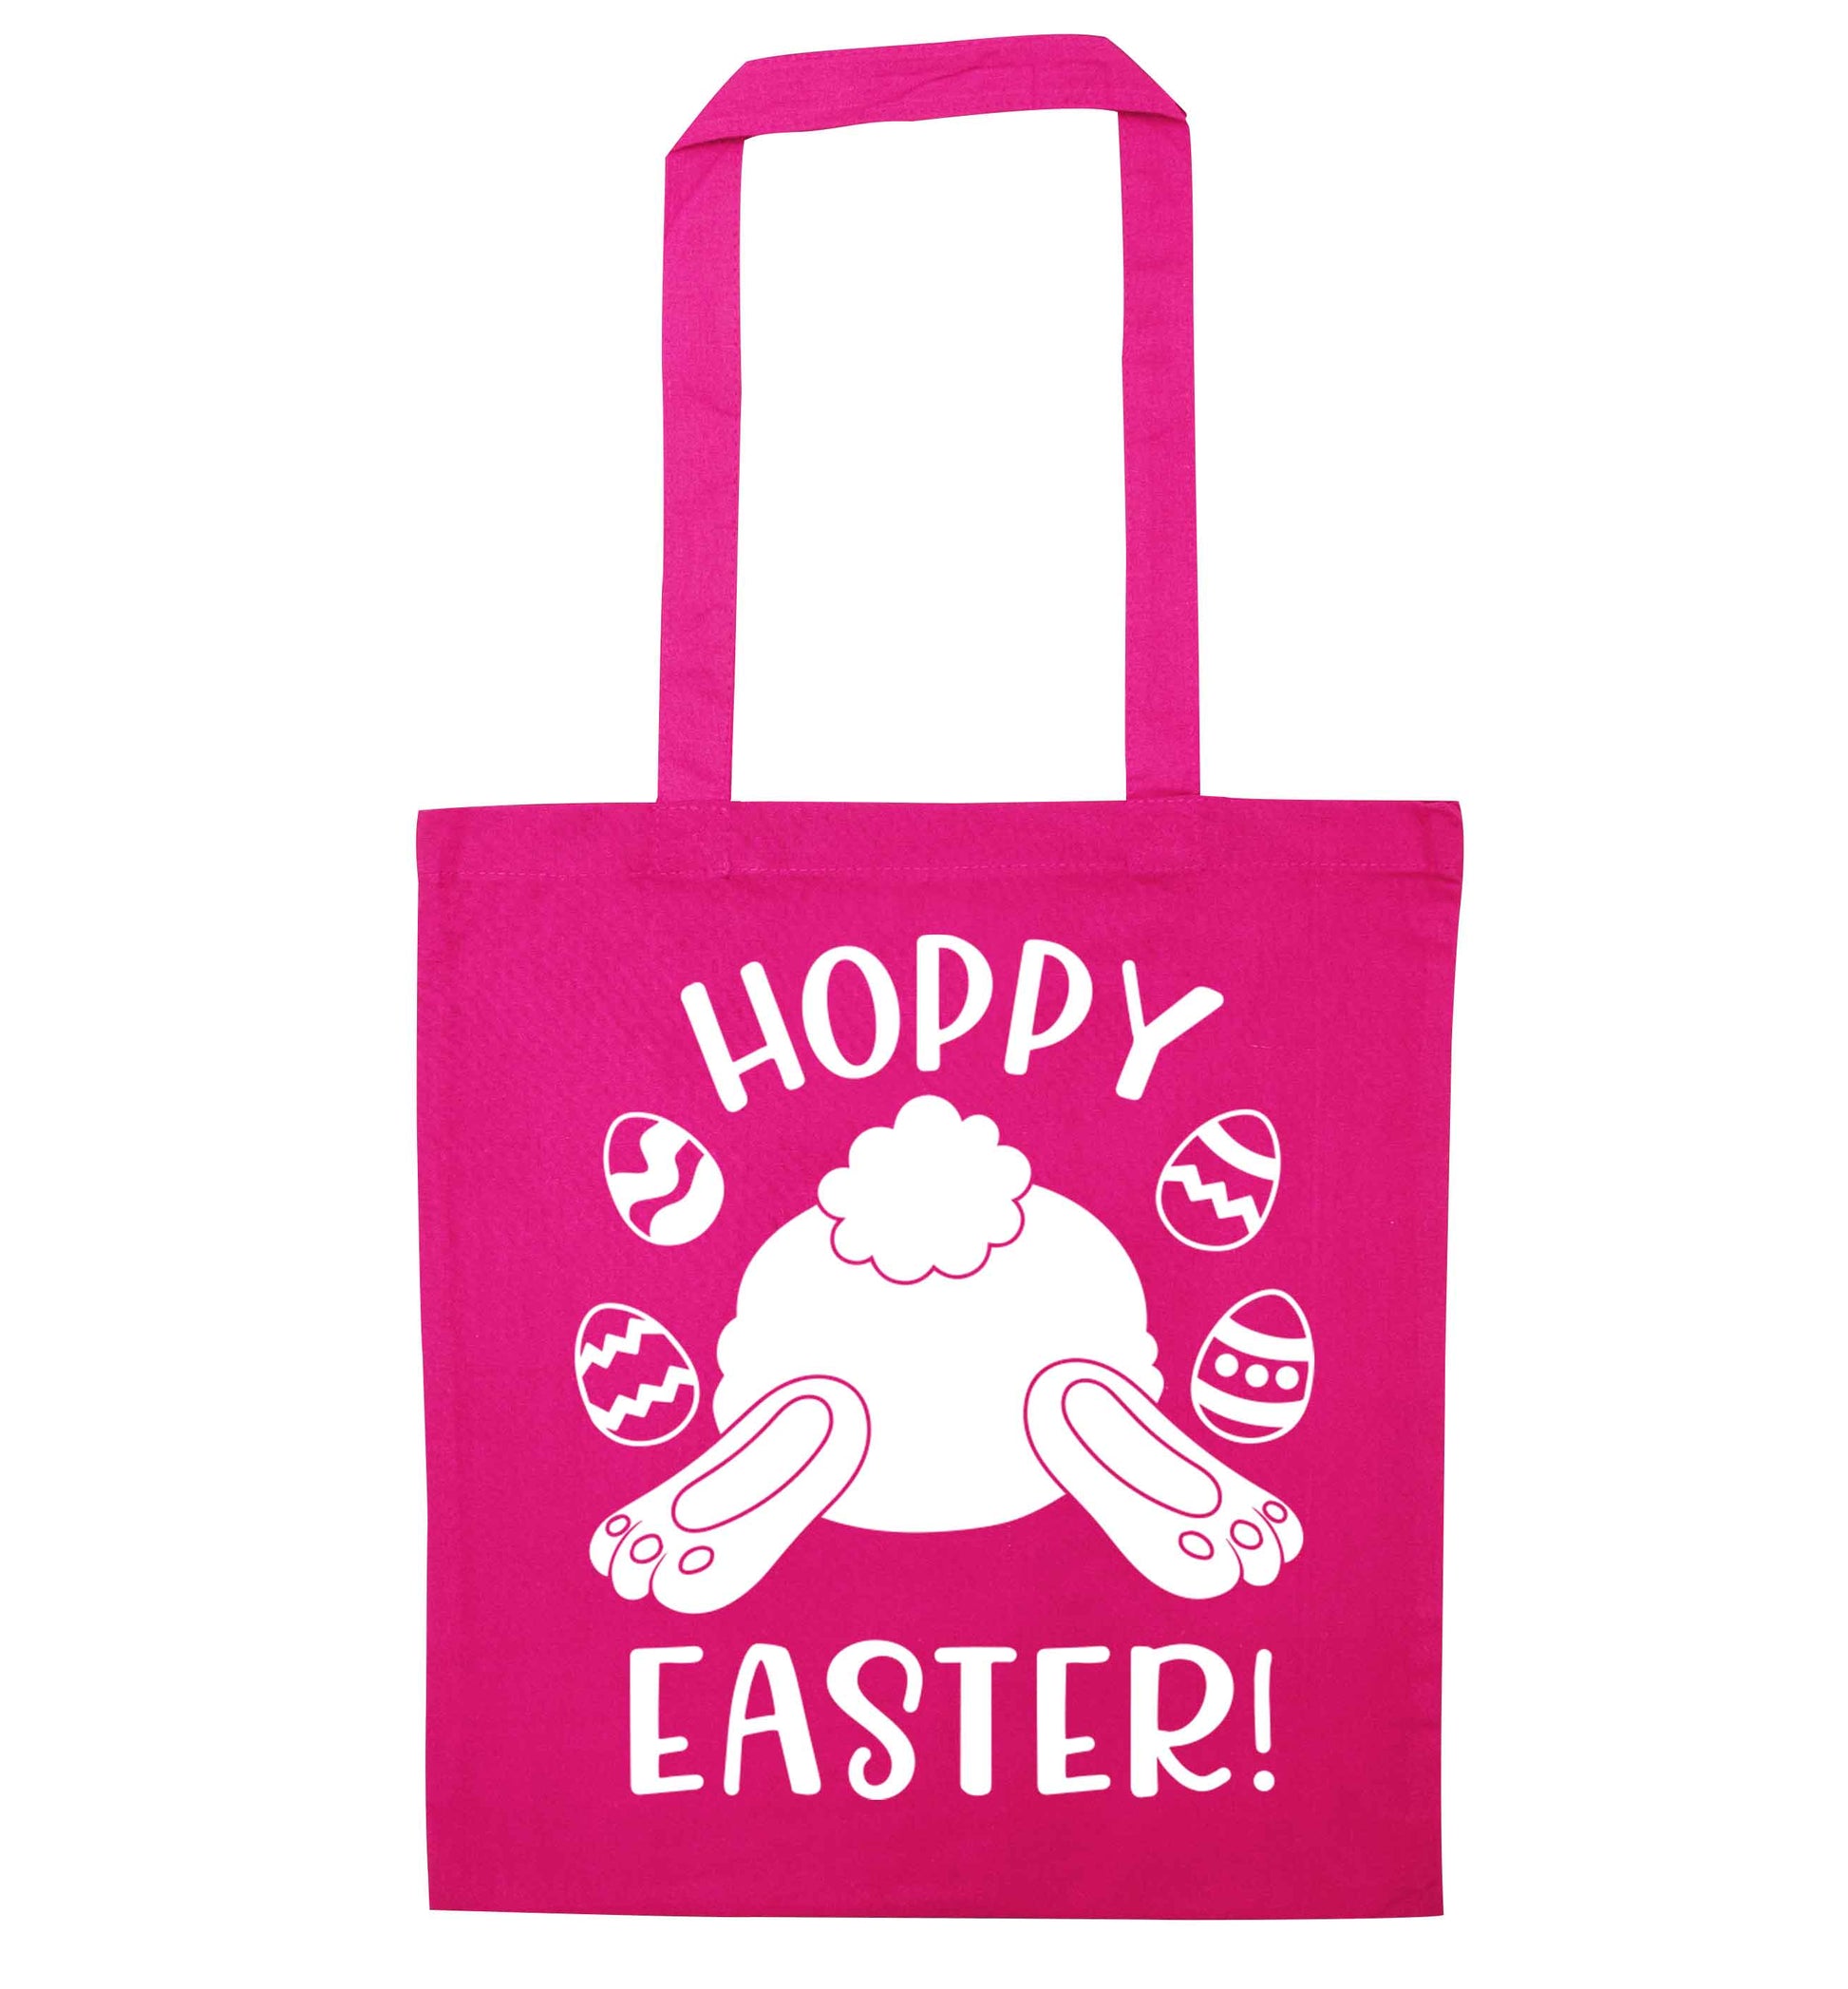 Hoppy Easter pink tote bag